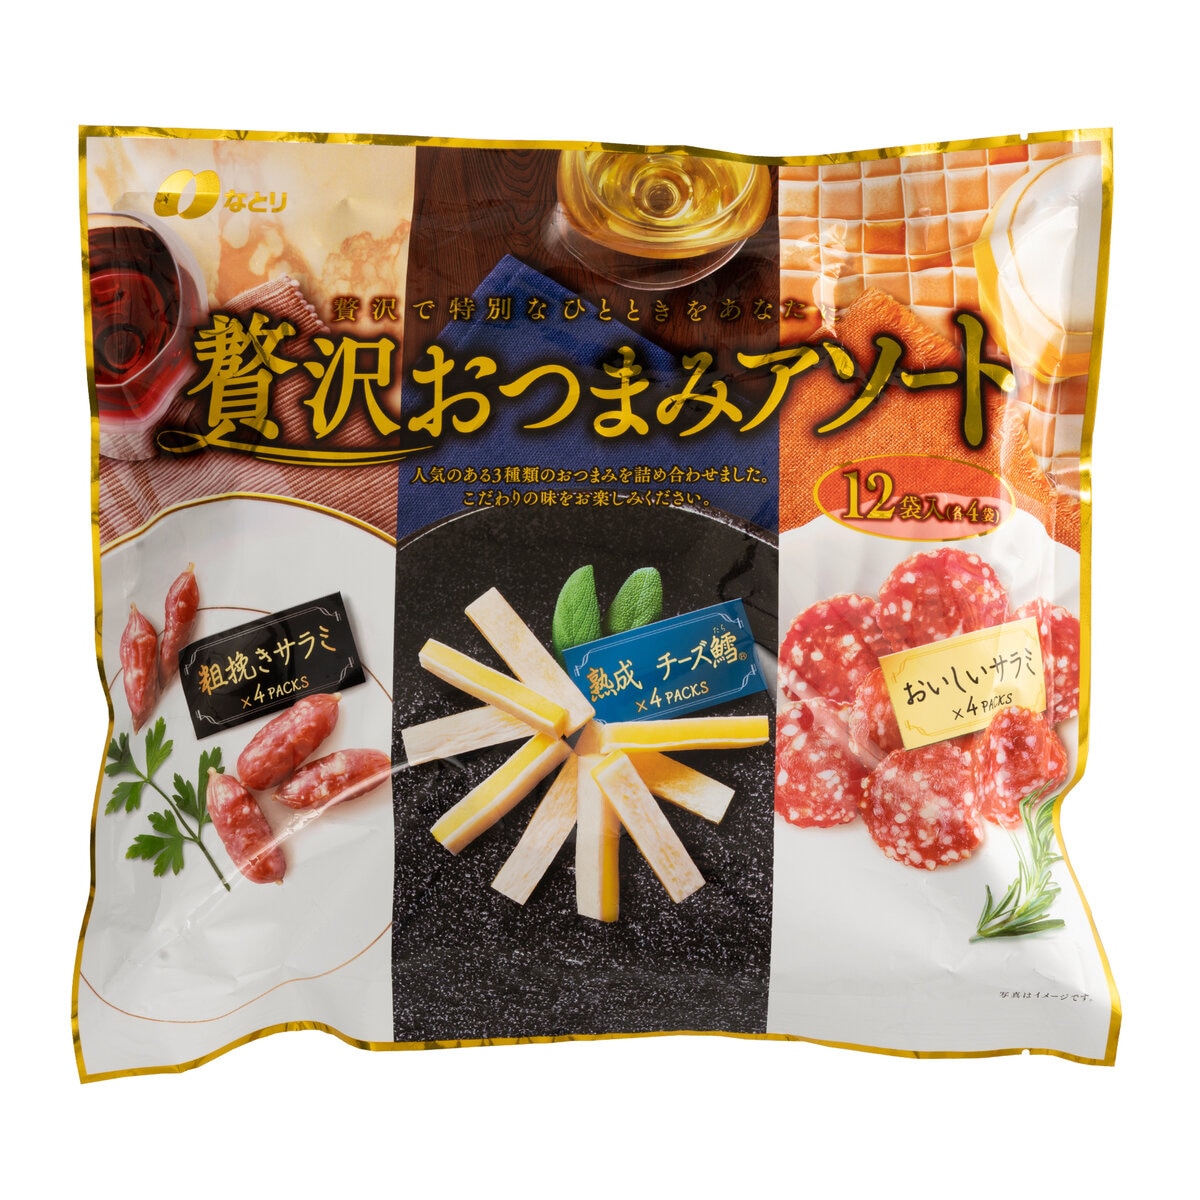 with wine 3種の大豆とチーズ8袋